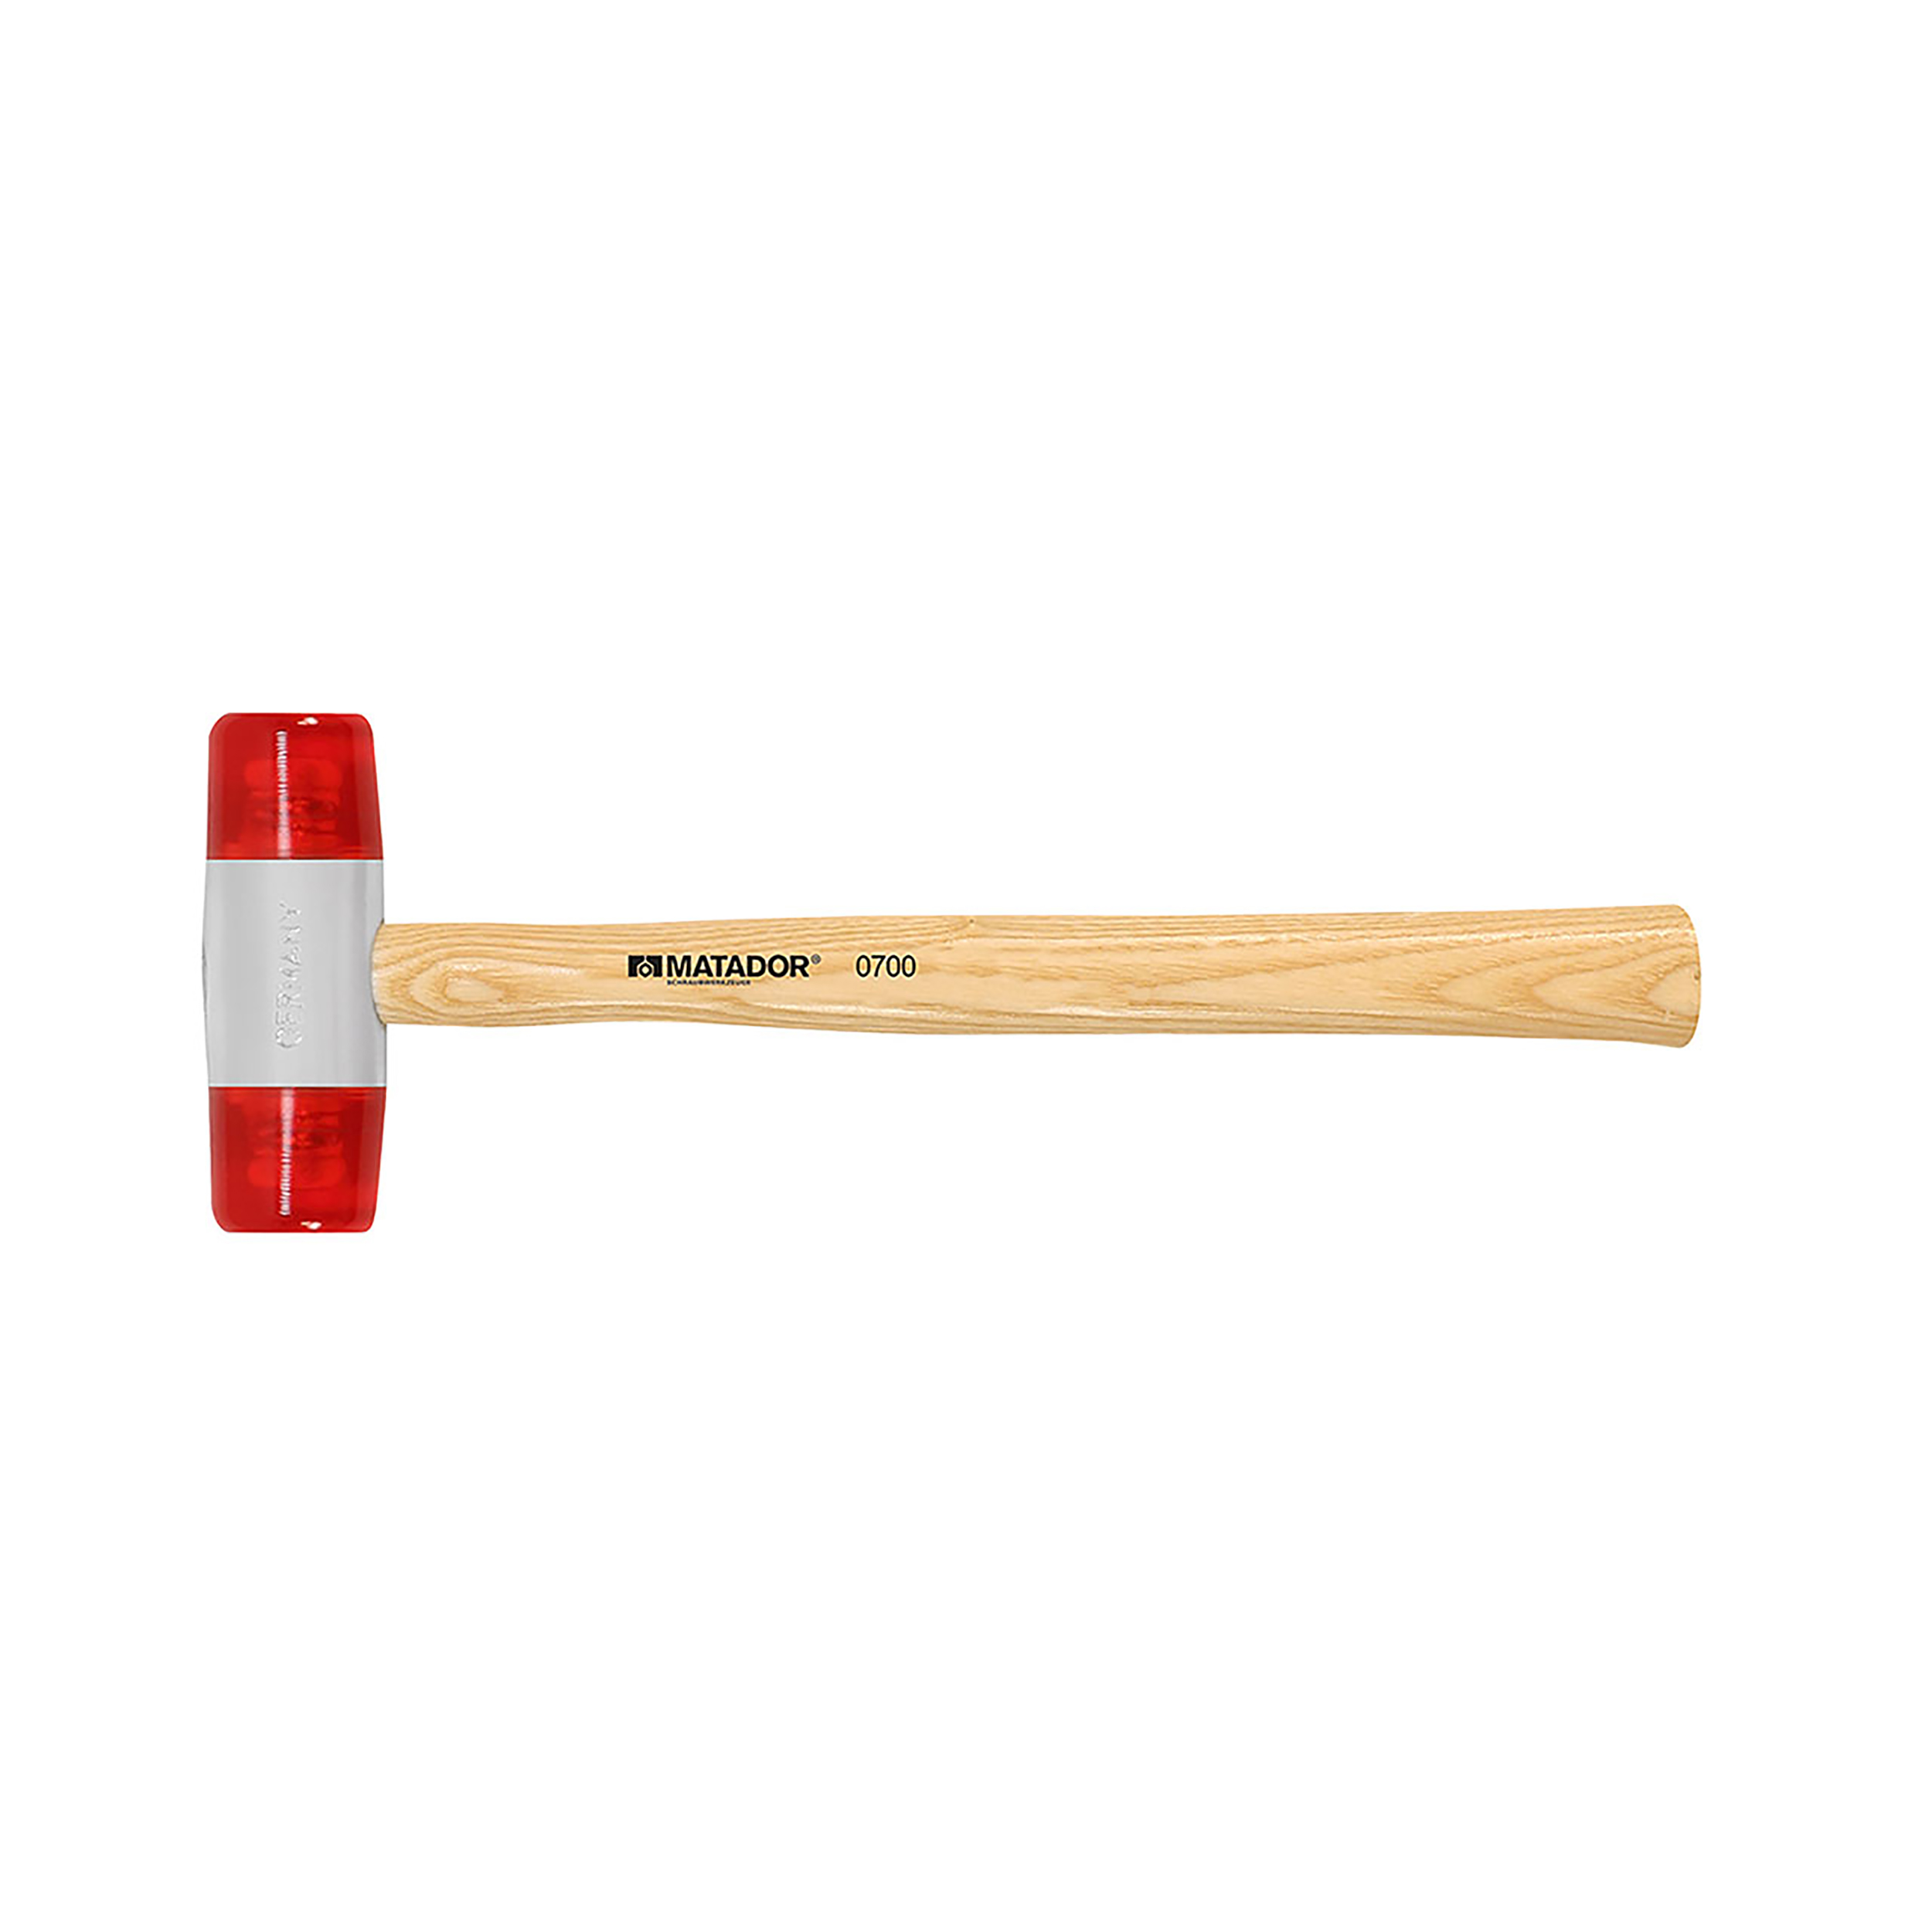 Treib- und Ausbeulhammer, 450 g, 35 mm, MATADOR Art.-Nr.: 07000004